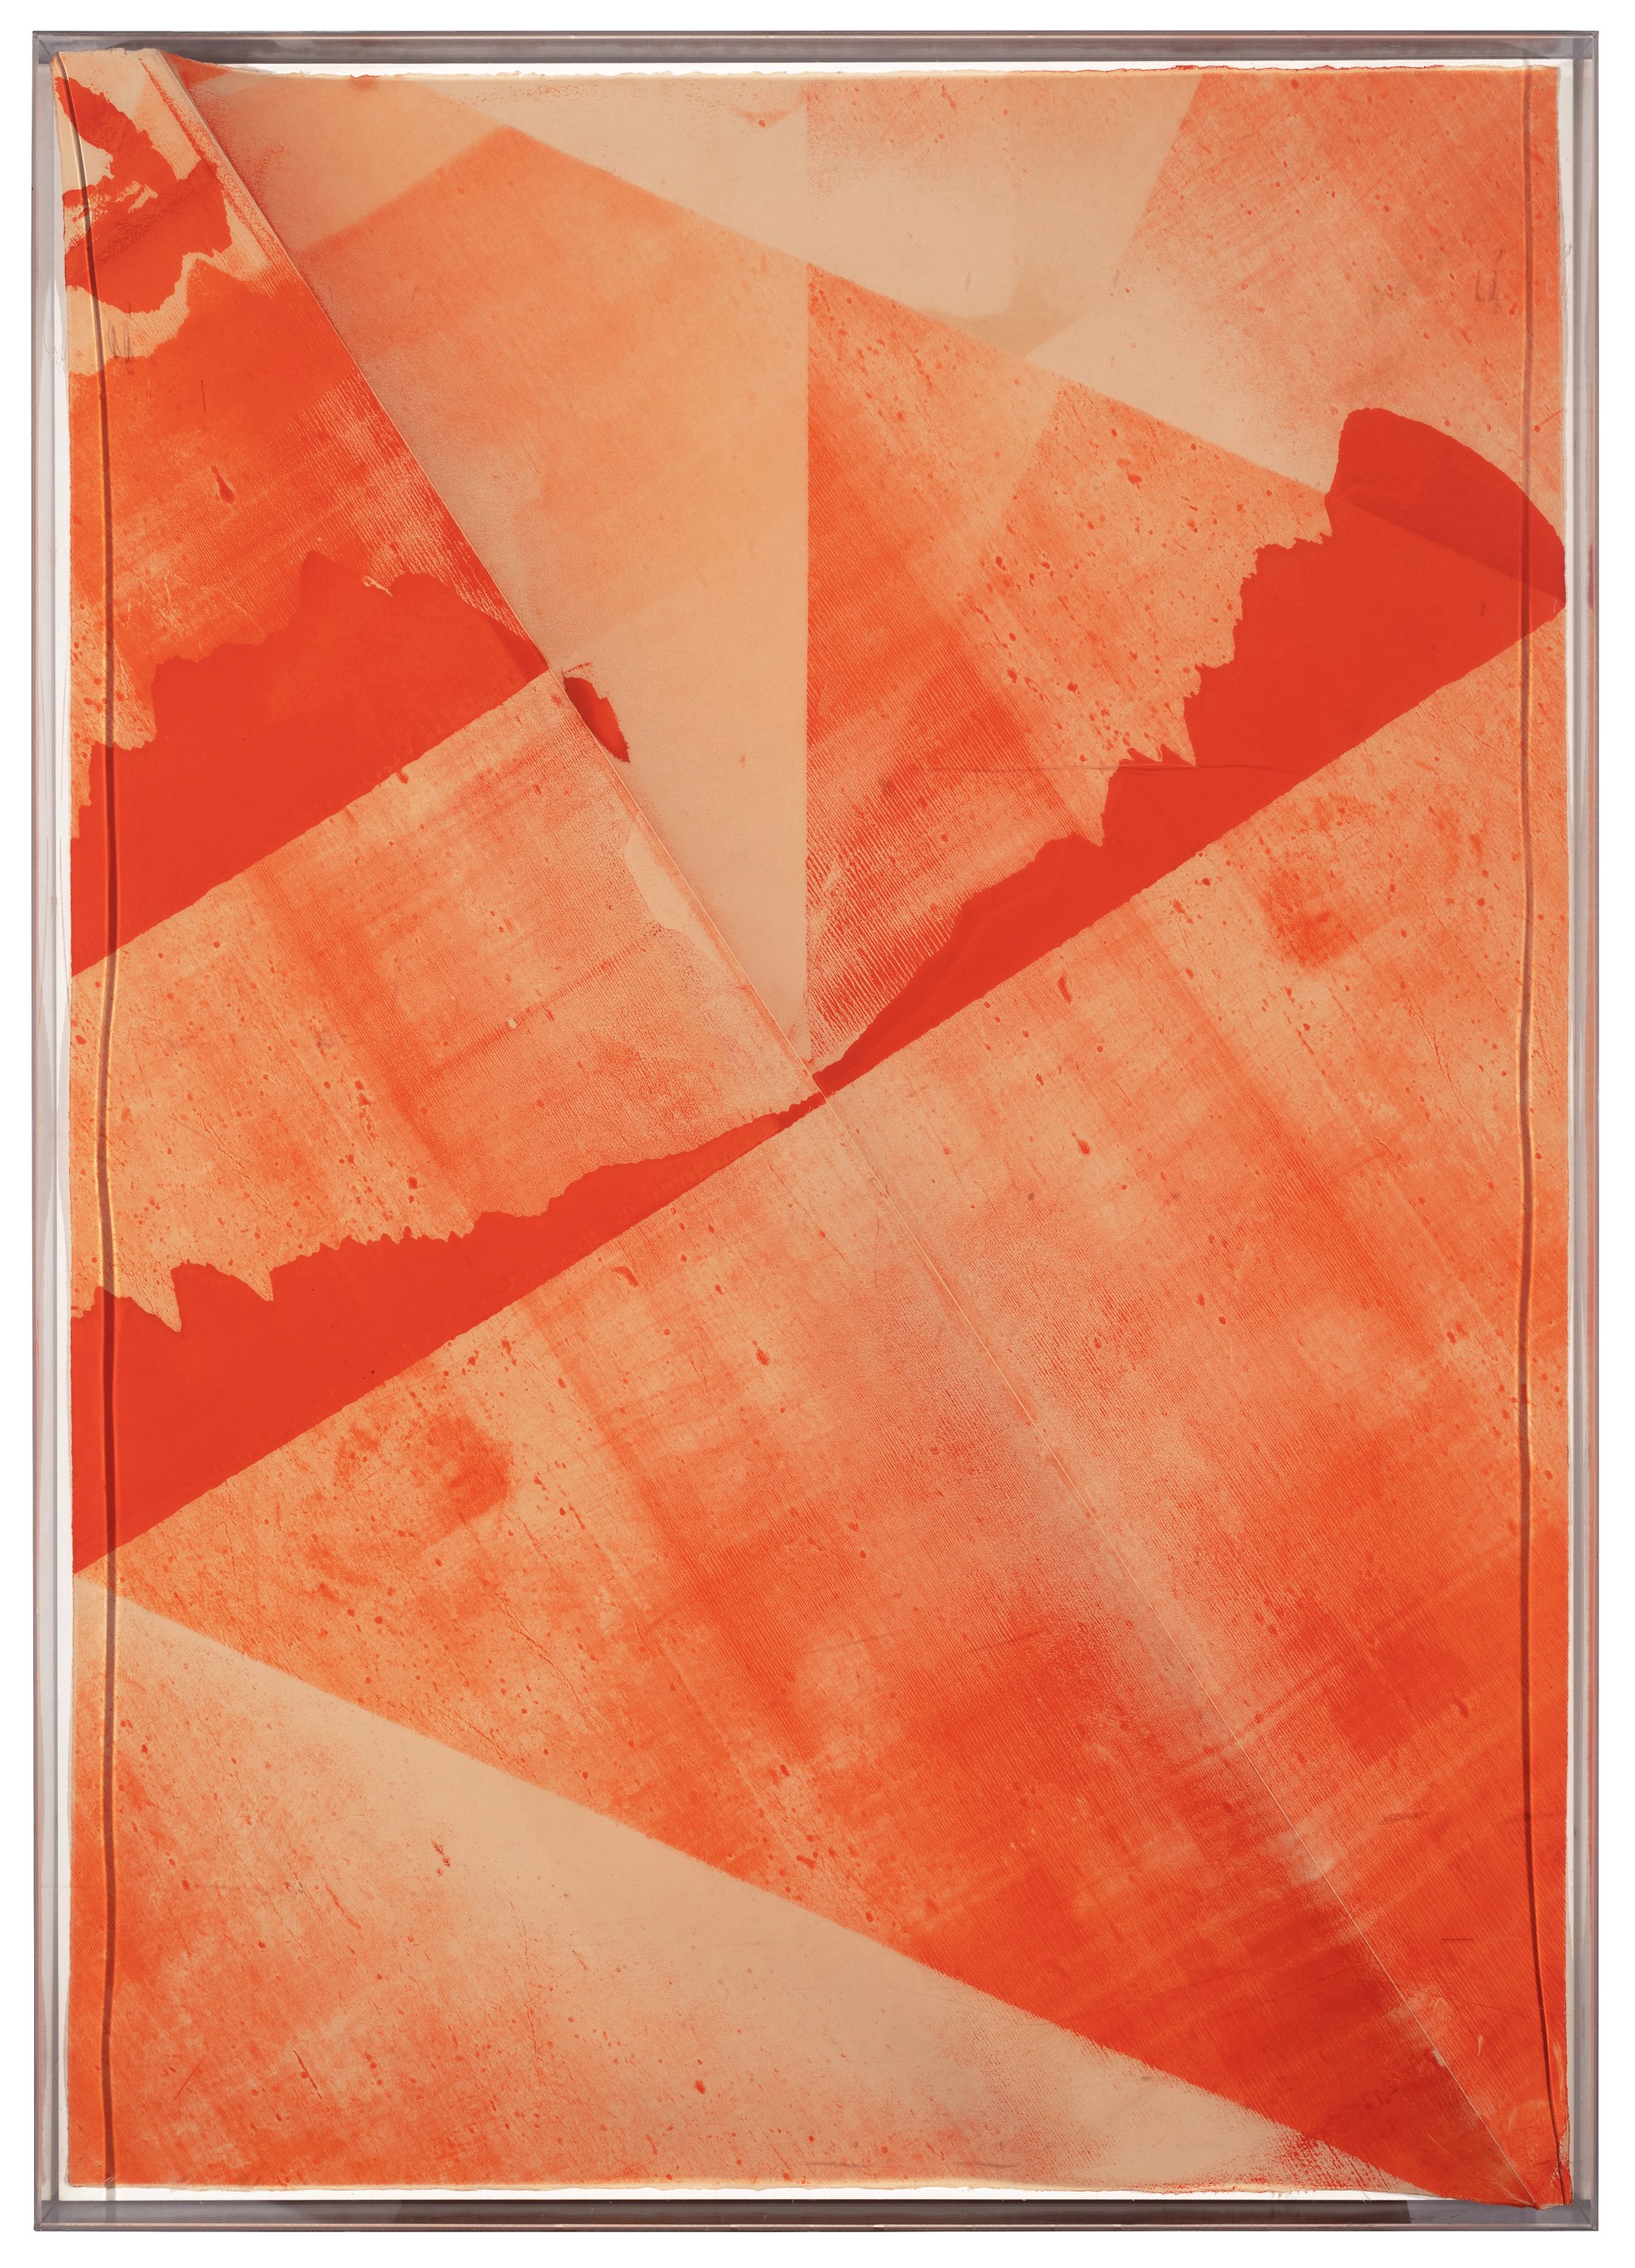 Untitled (Orange Abstract) by Jeffery Francis Beardsall